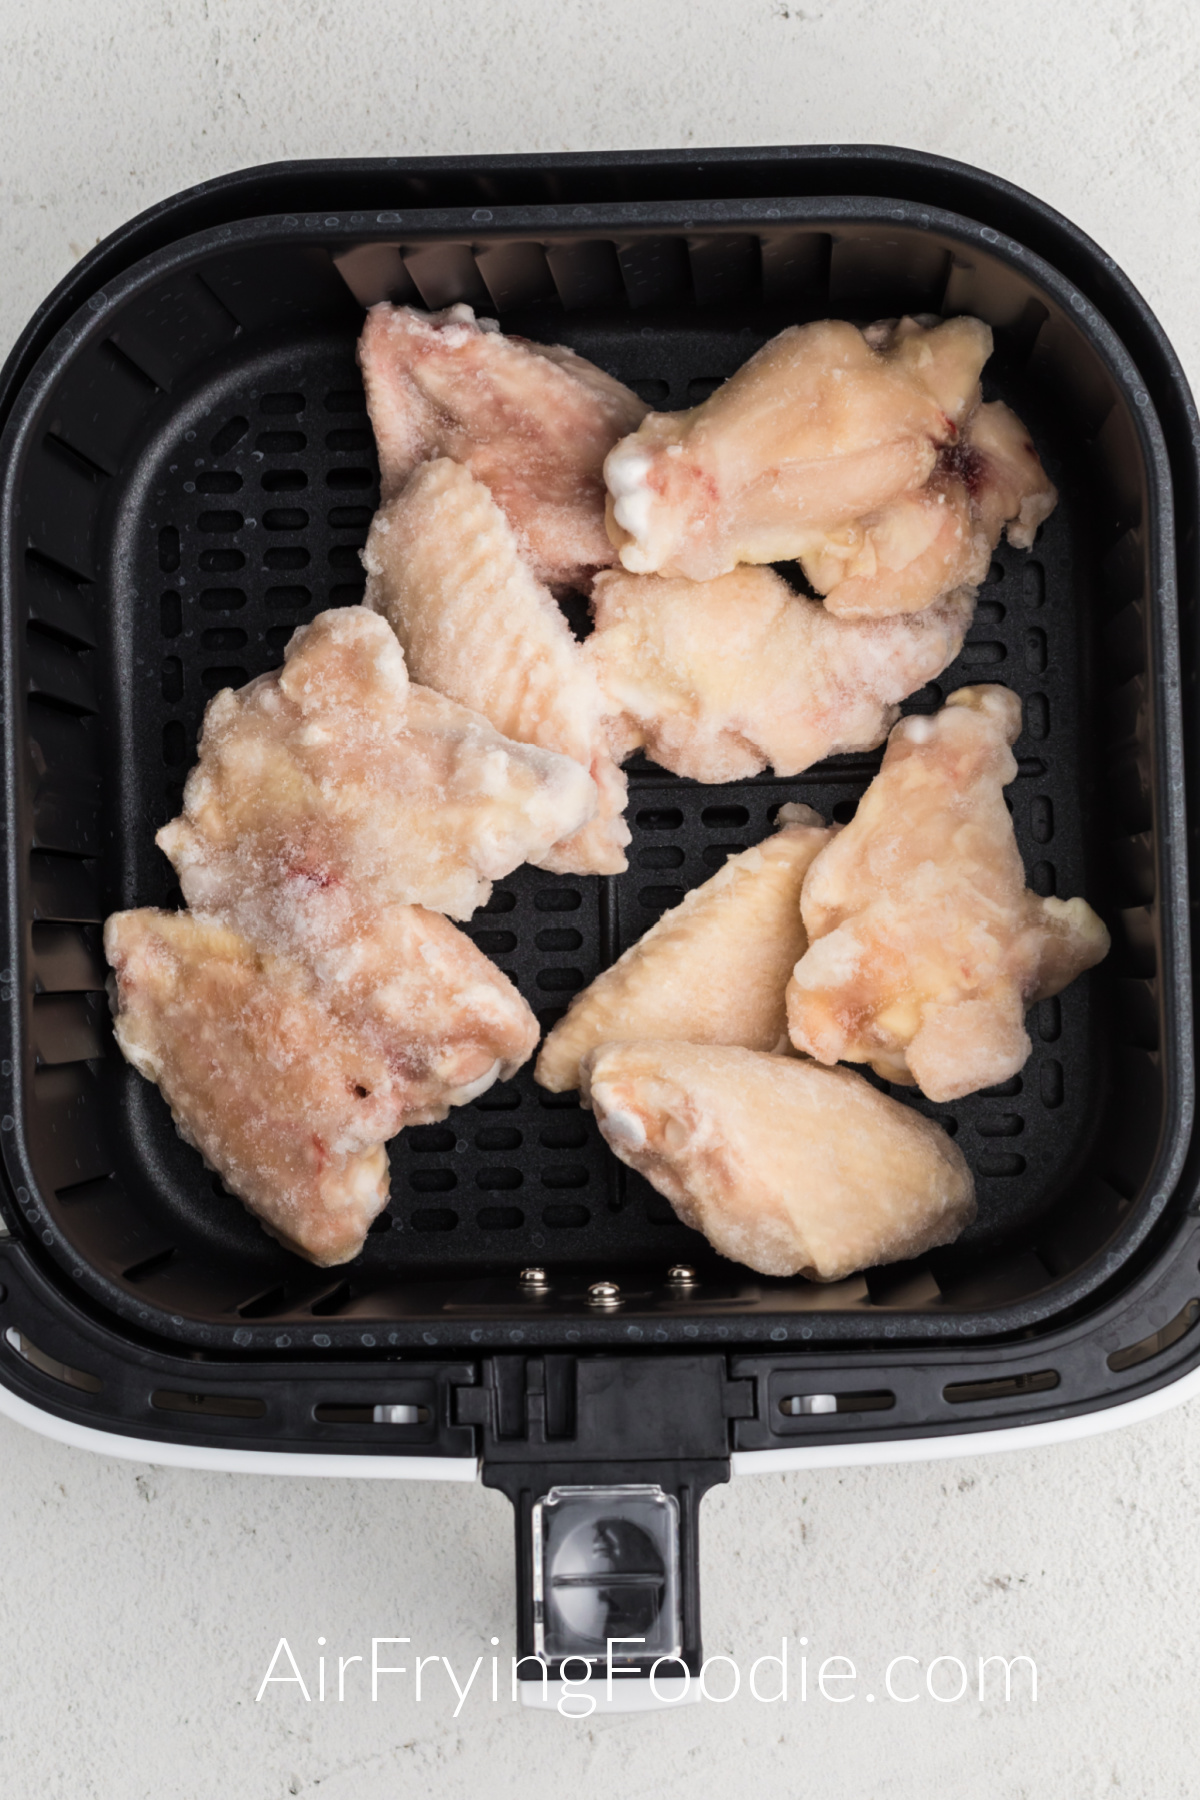 frozen chicken wings in the basket of the air fryer